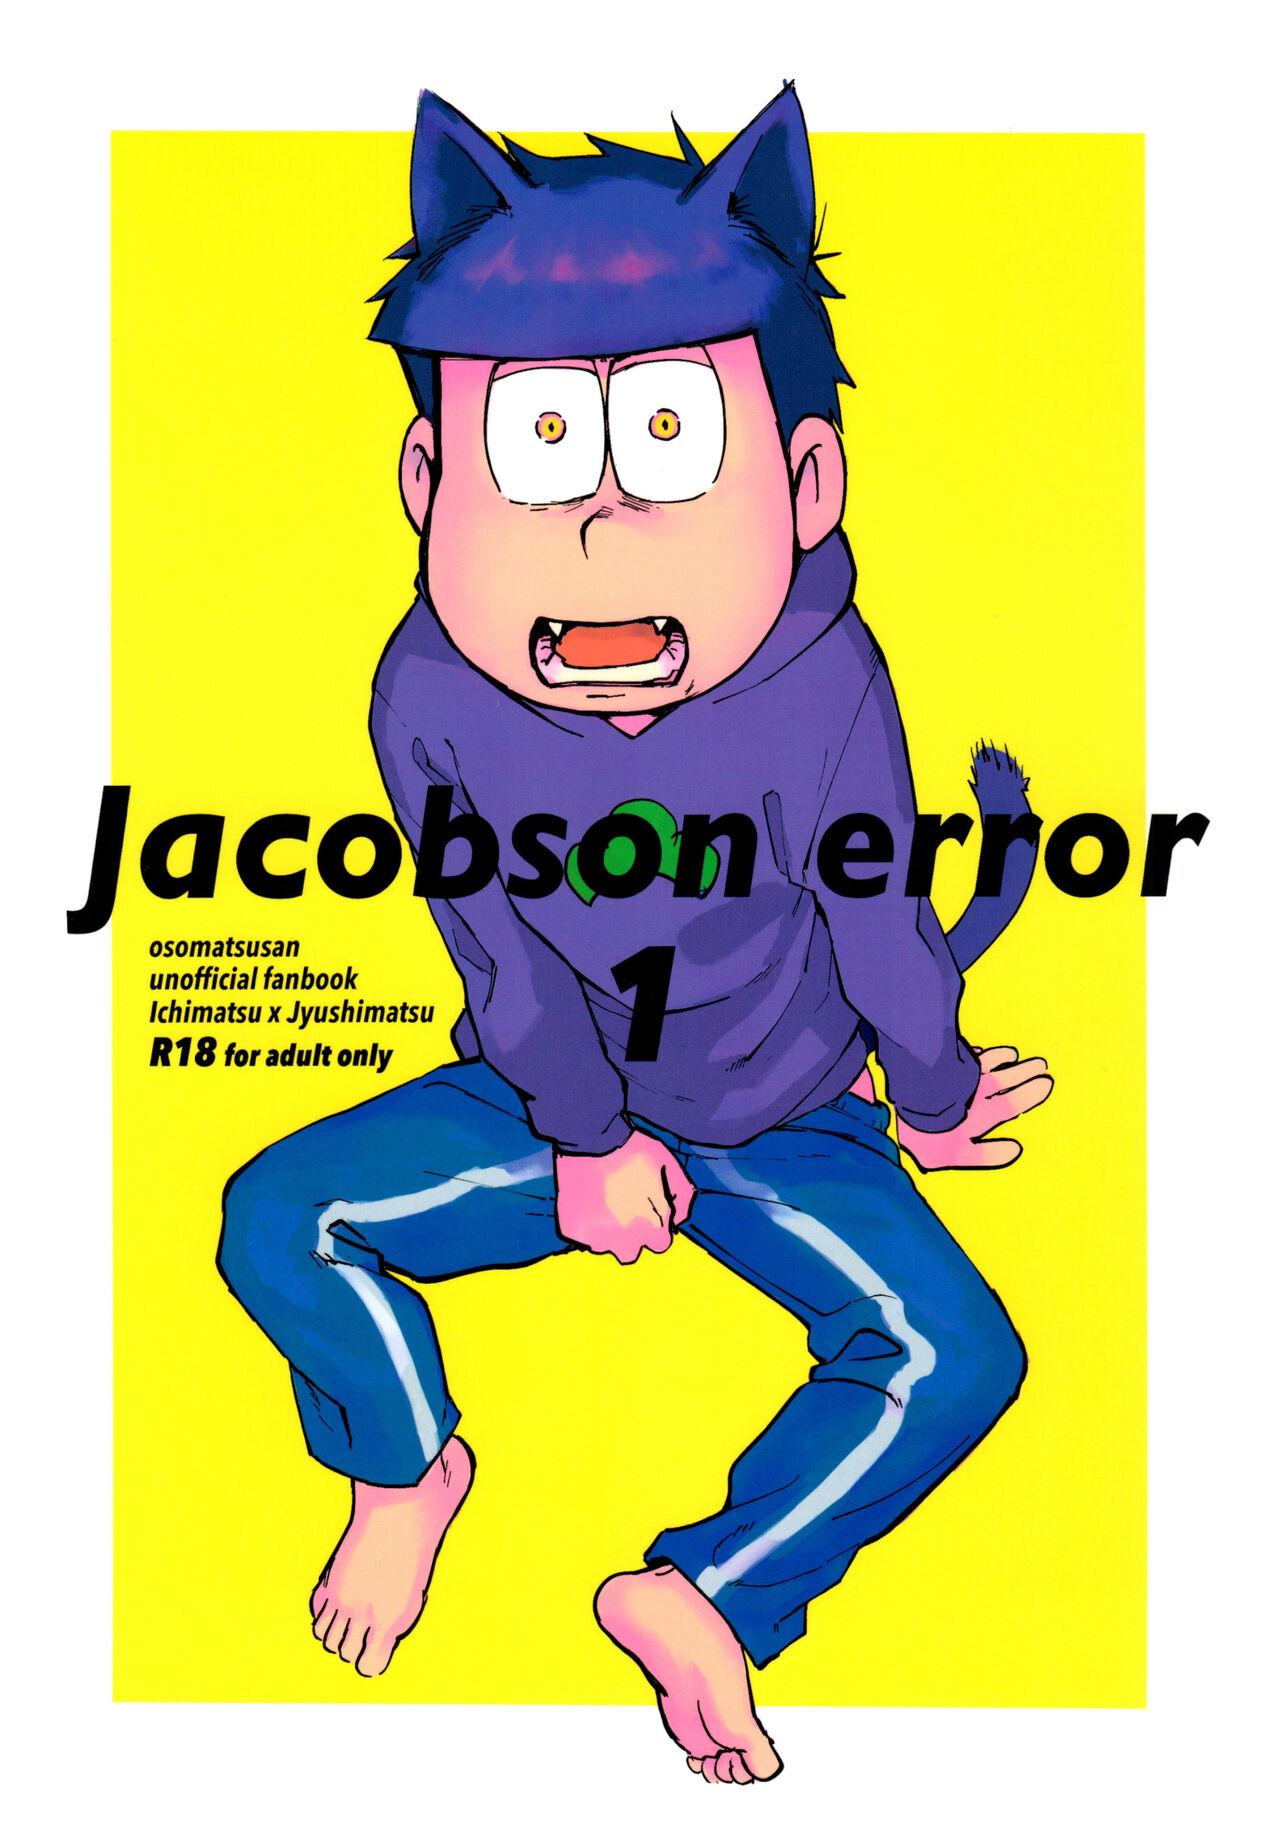 jacobson error1 0